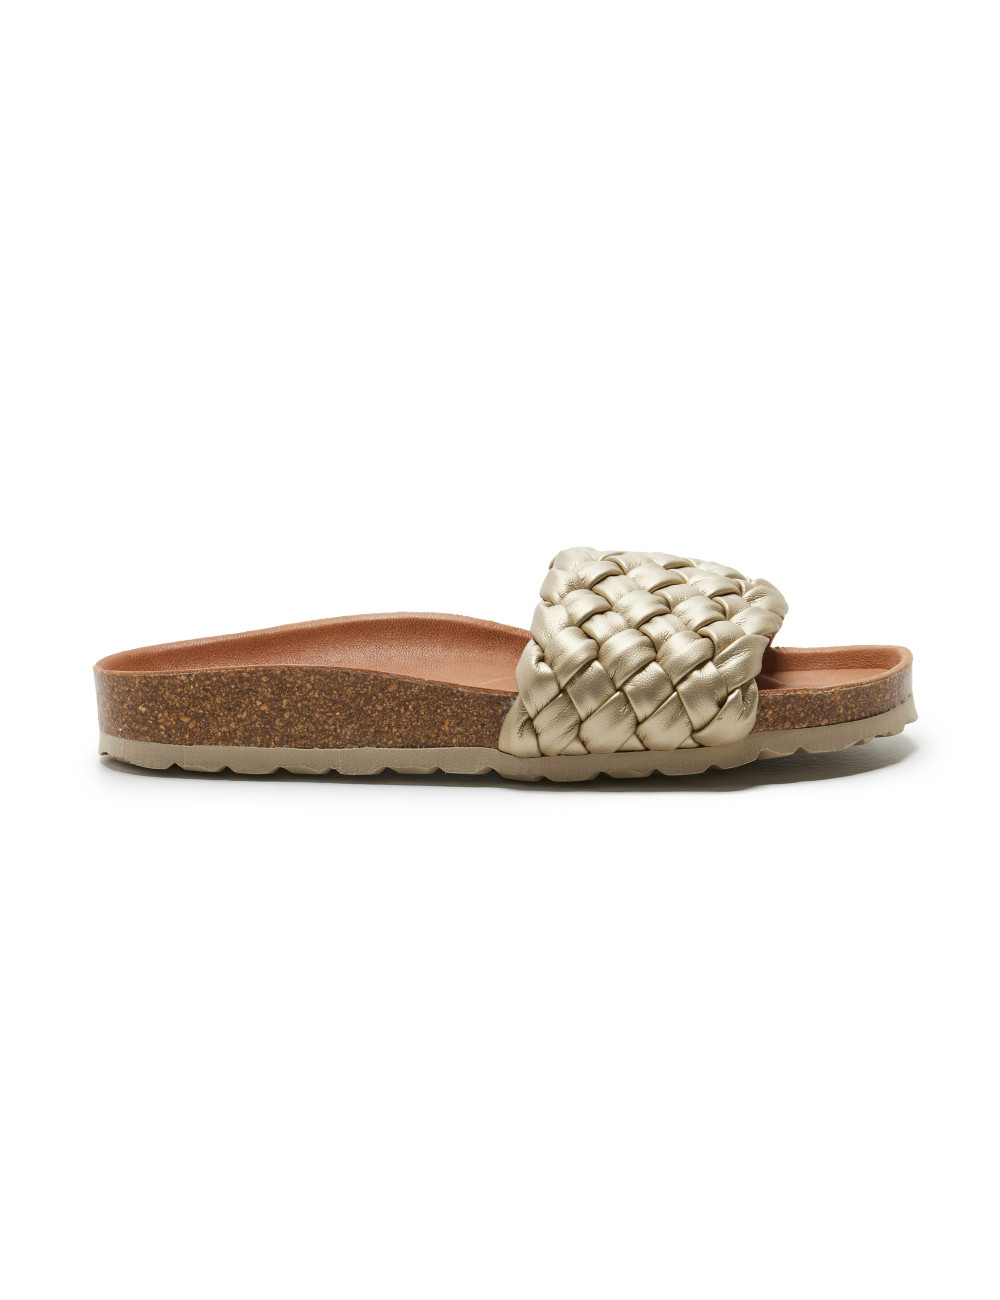 Buy Women's leather sandals made in Spain Verbenas®.